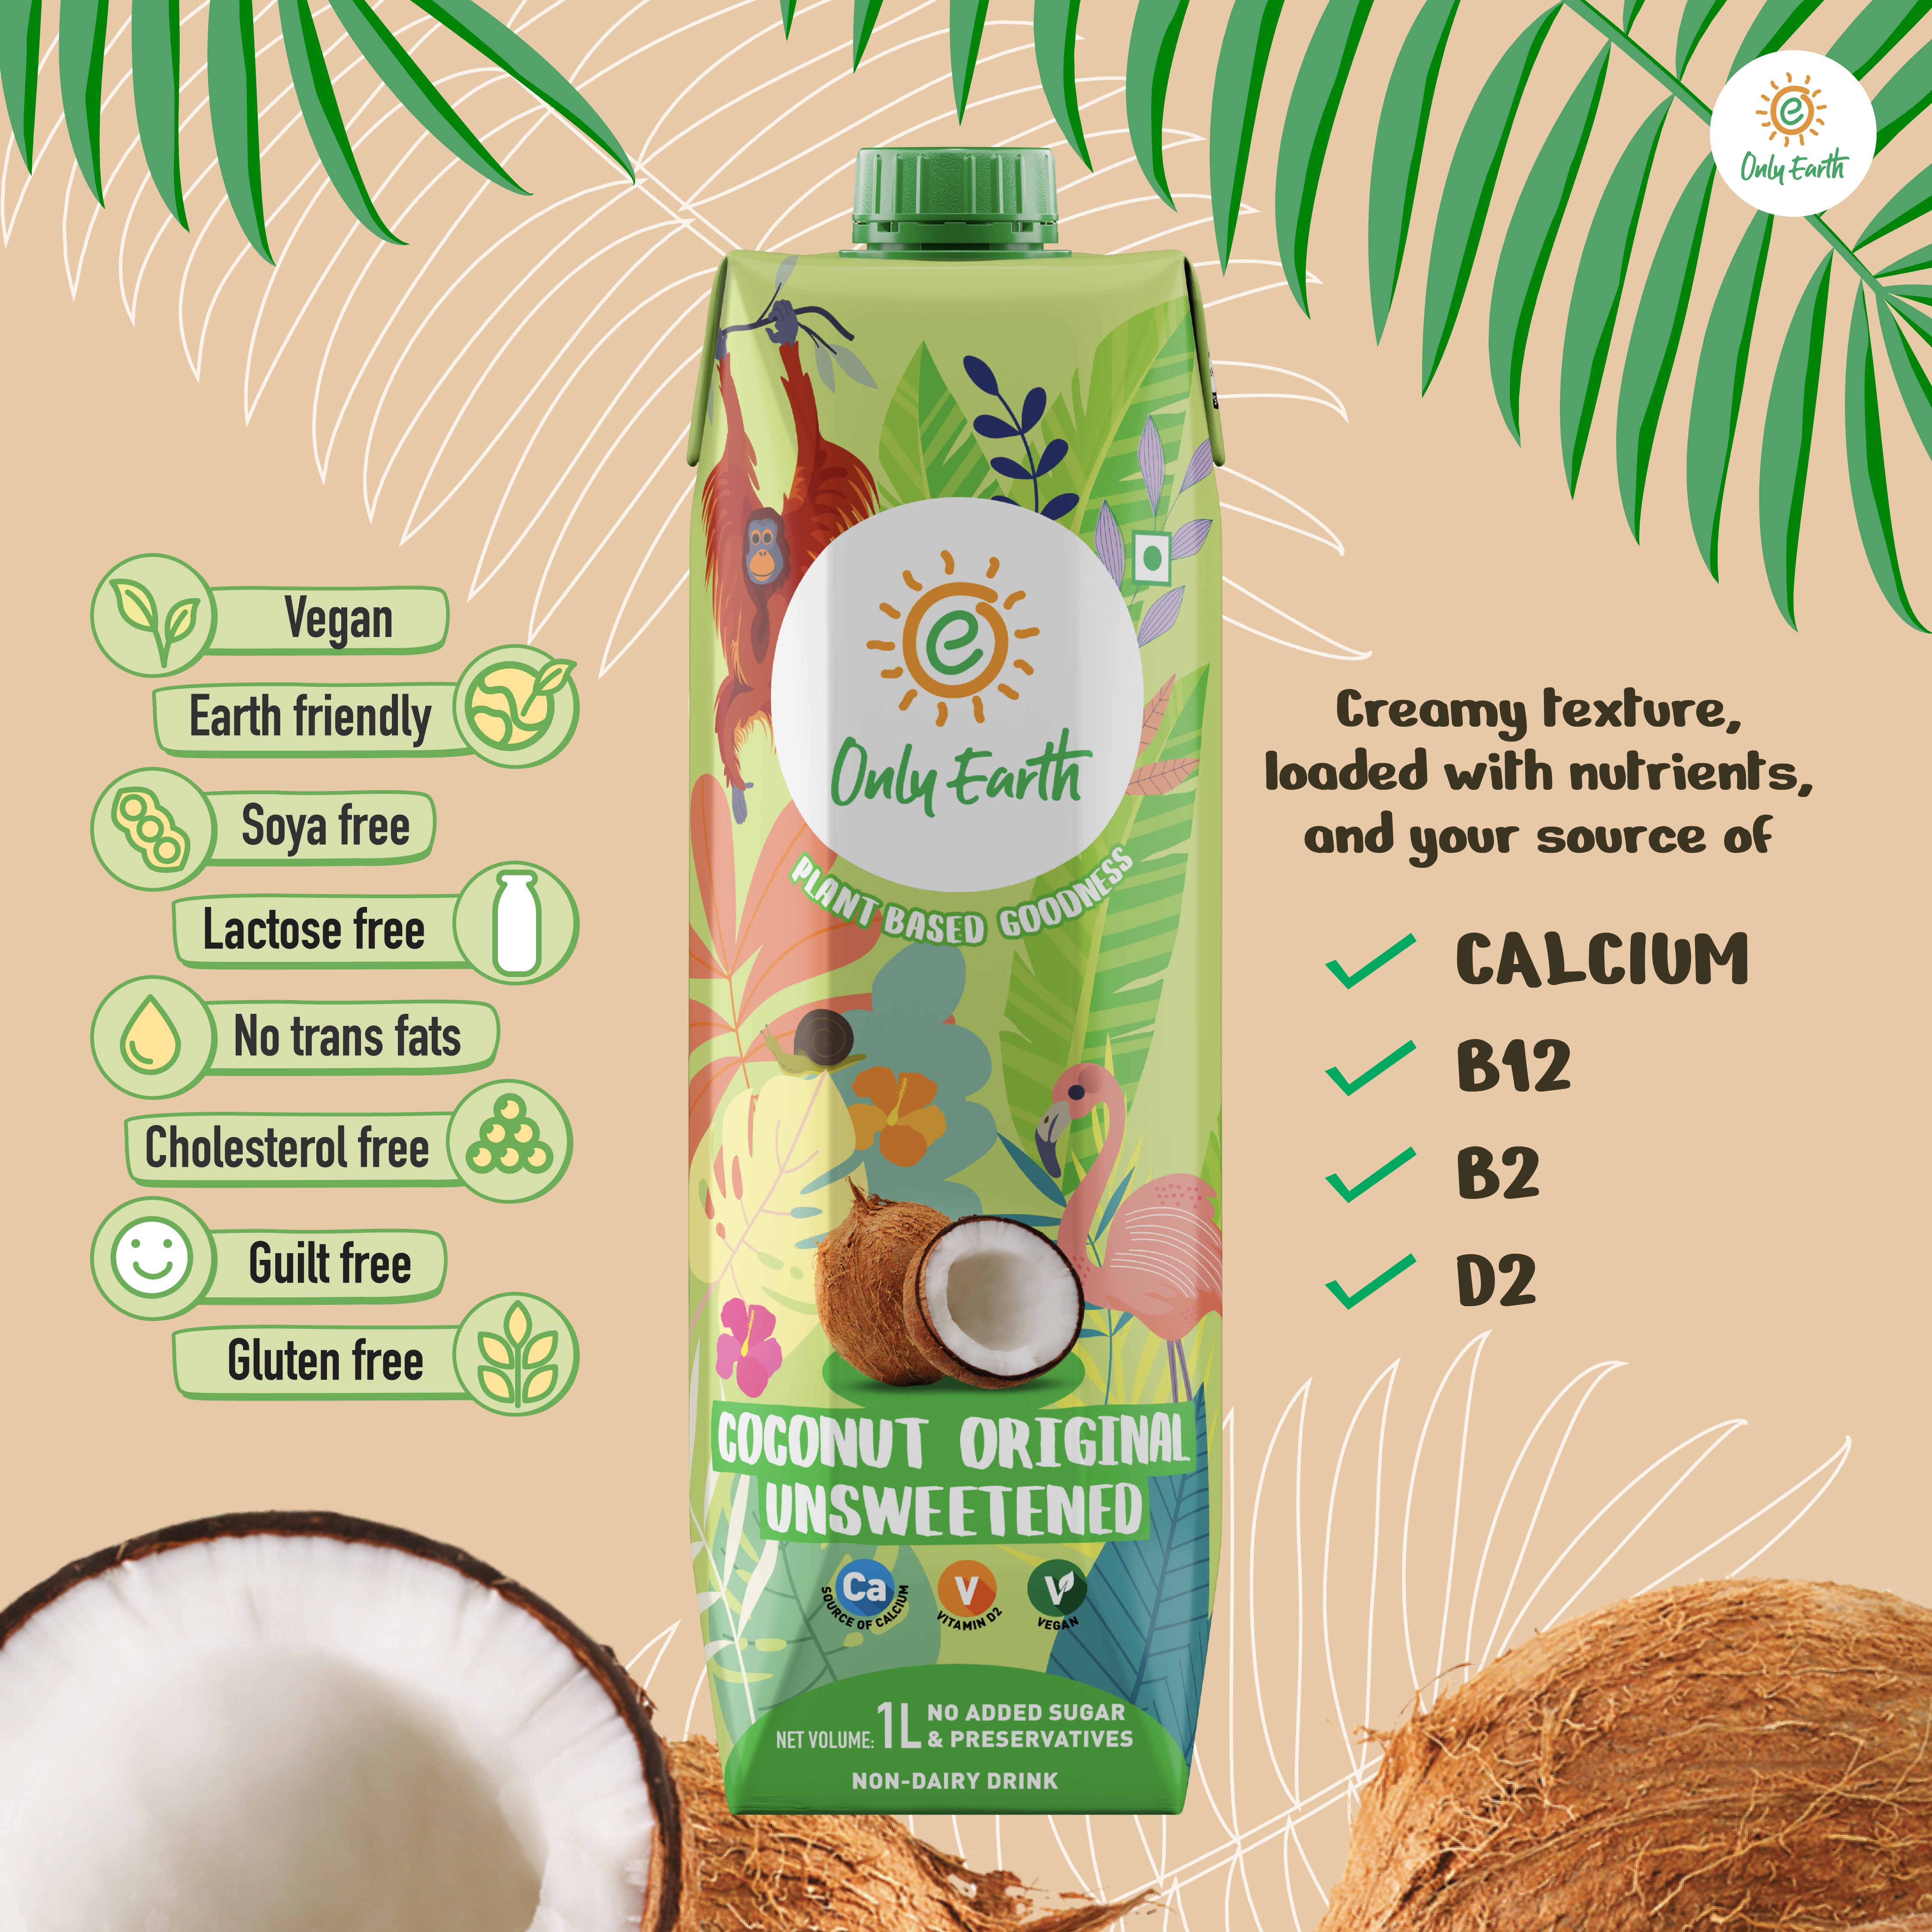 Coconut milk tetra pack